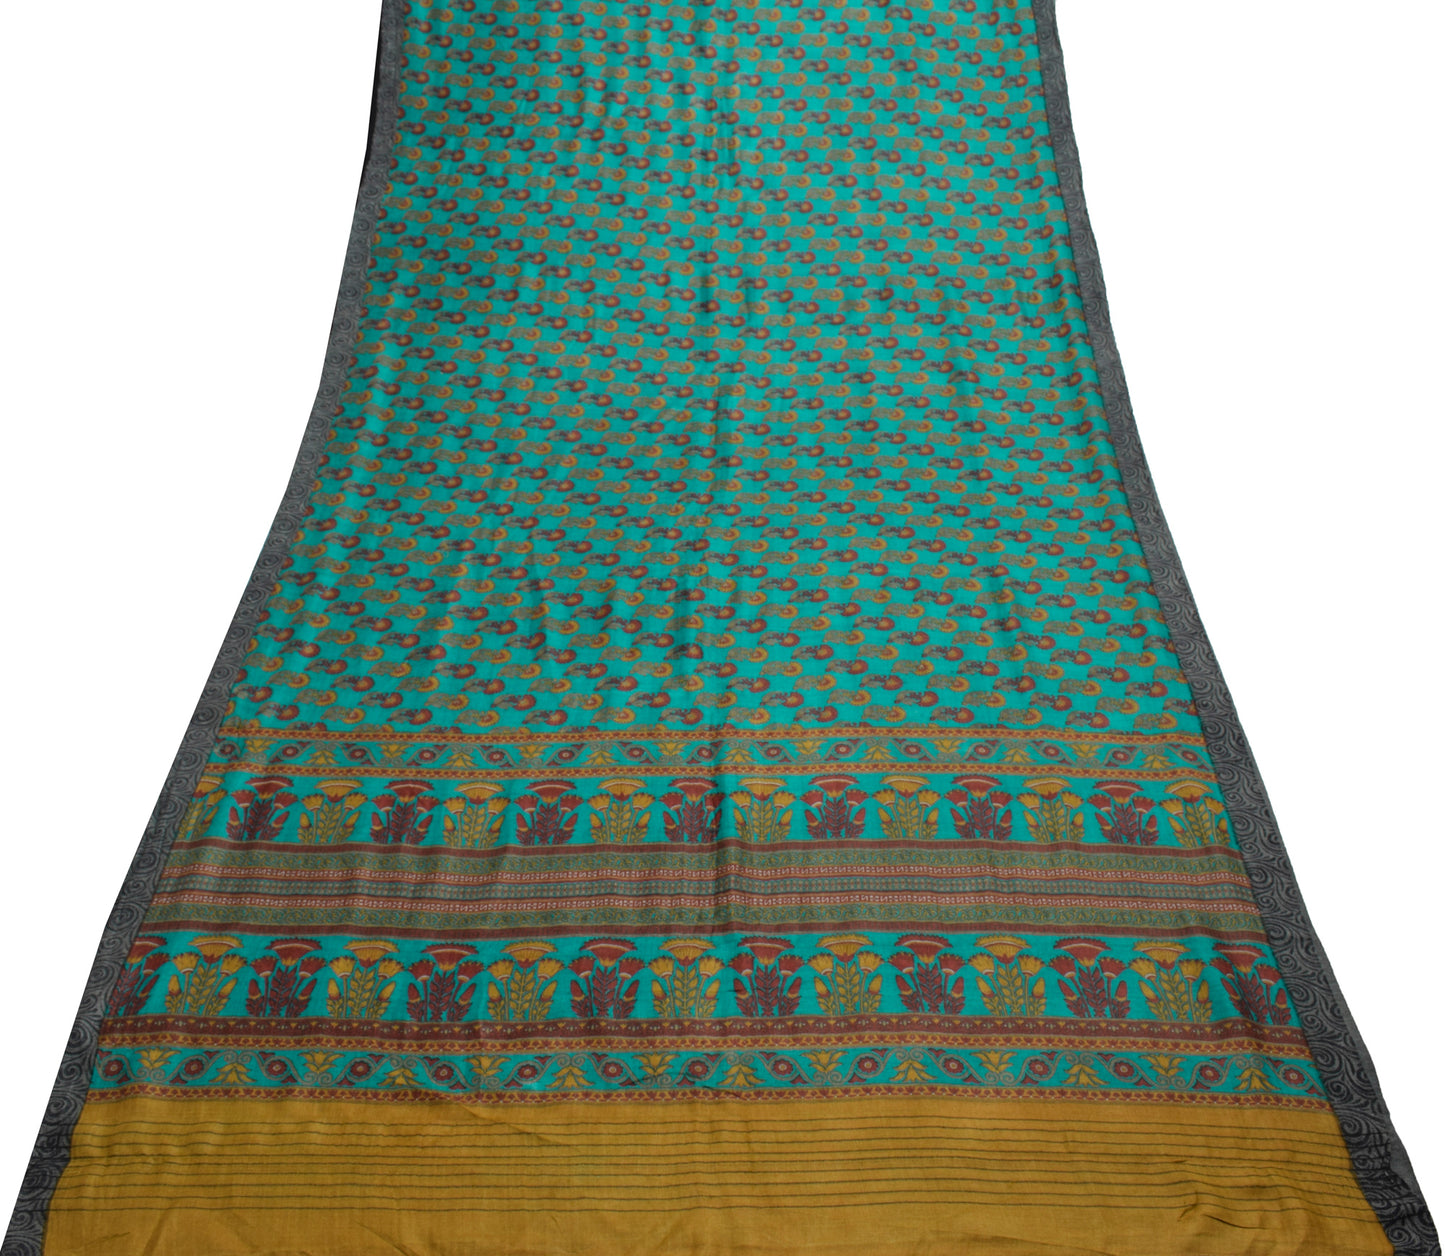 Sushila Vintage Indian Saree 100% Pure Woolen Woven Floral Soft 5 YD Sari Fabric